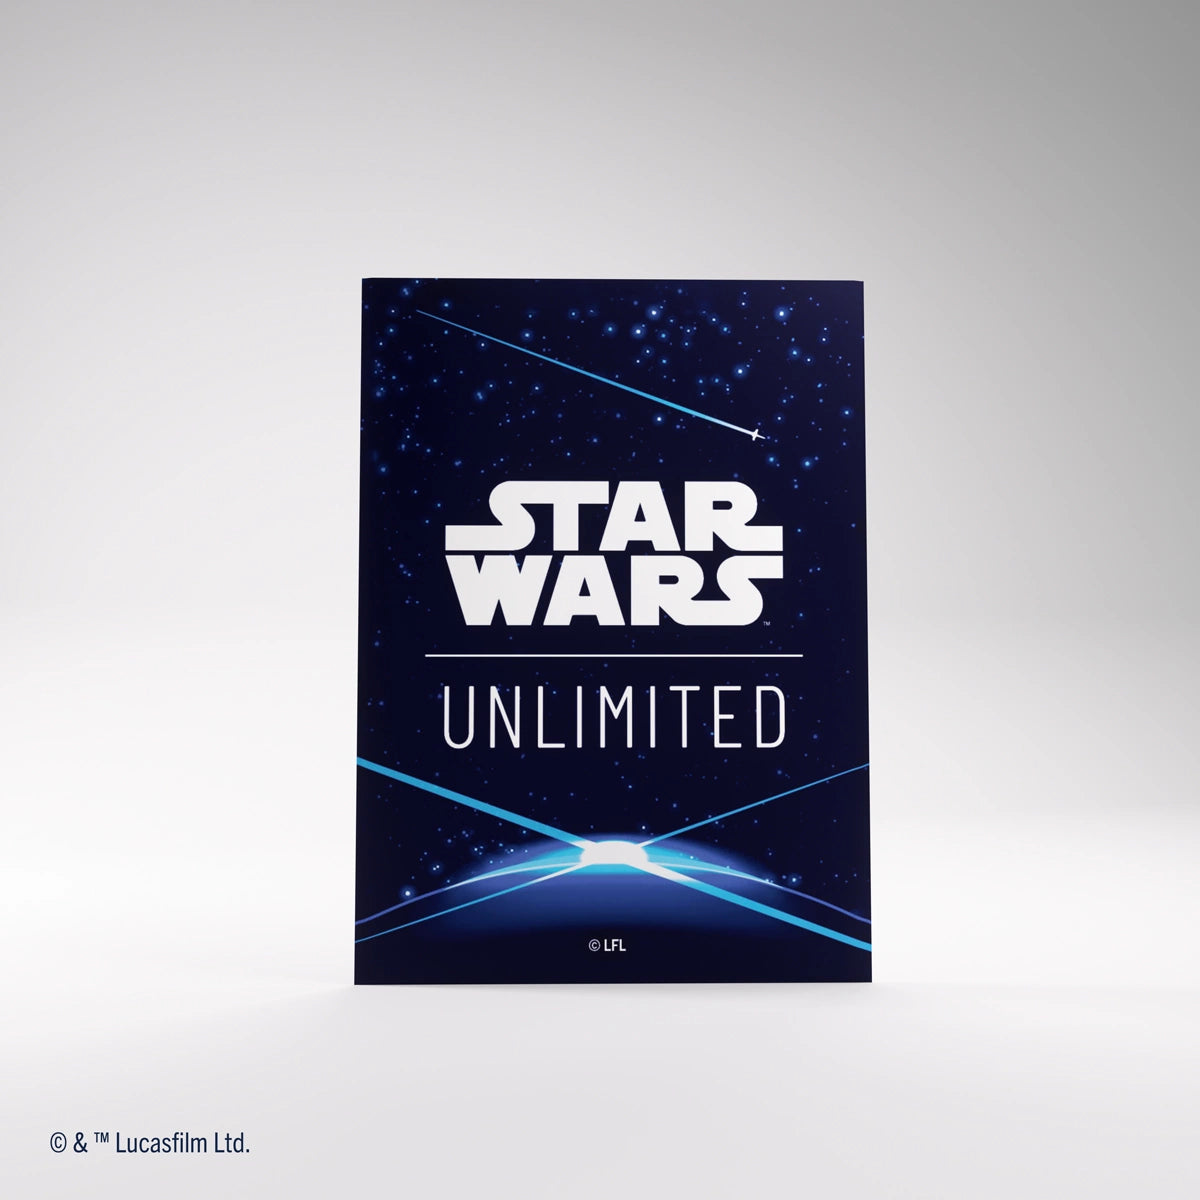 Gamegenic - Star Wars: Unlimited - Art Sleeves - Card Back Blue